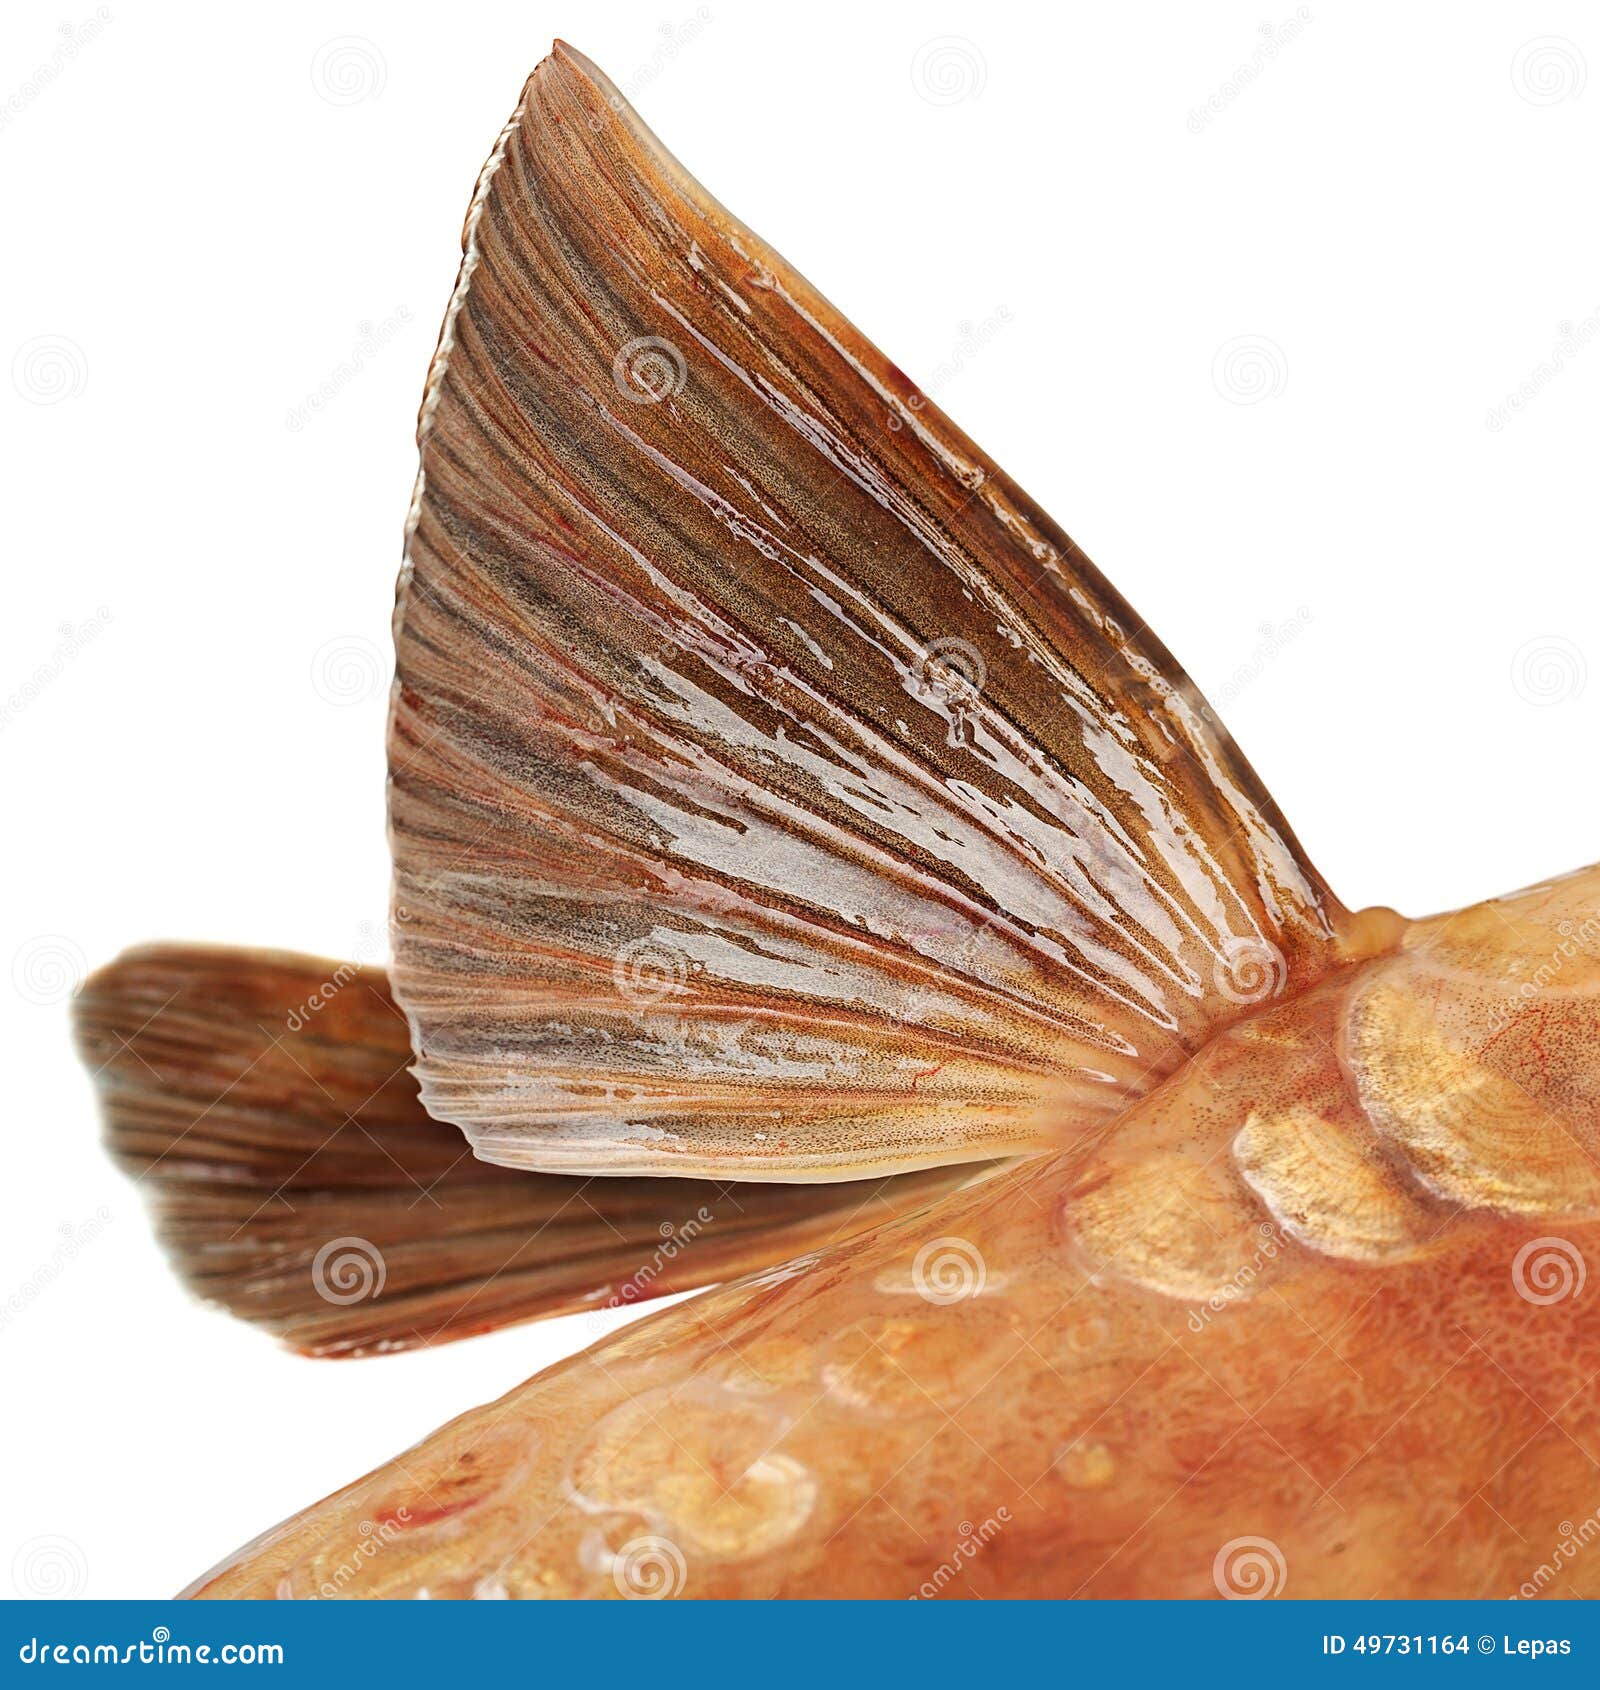 mirror carp fish flipper